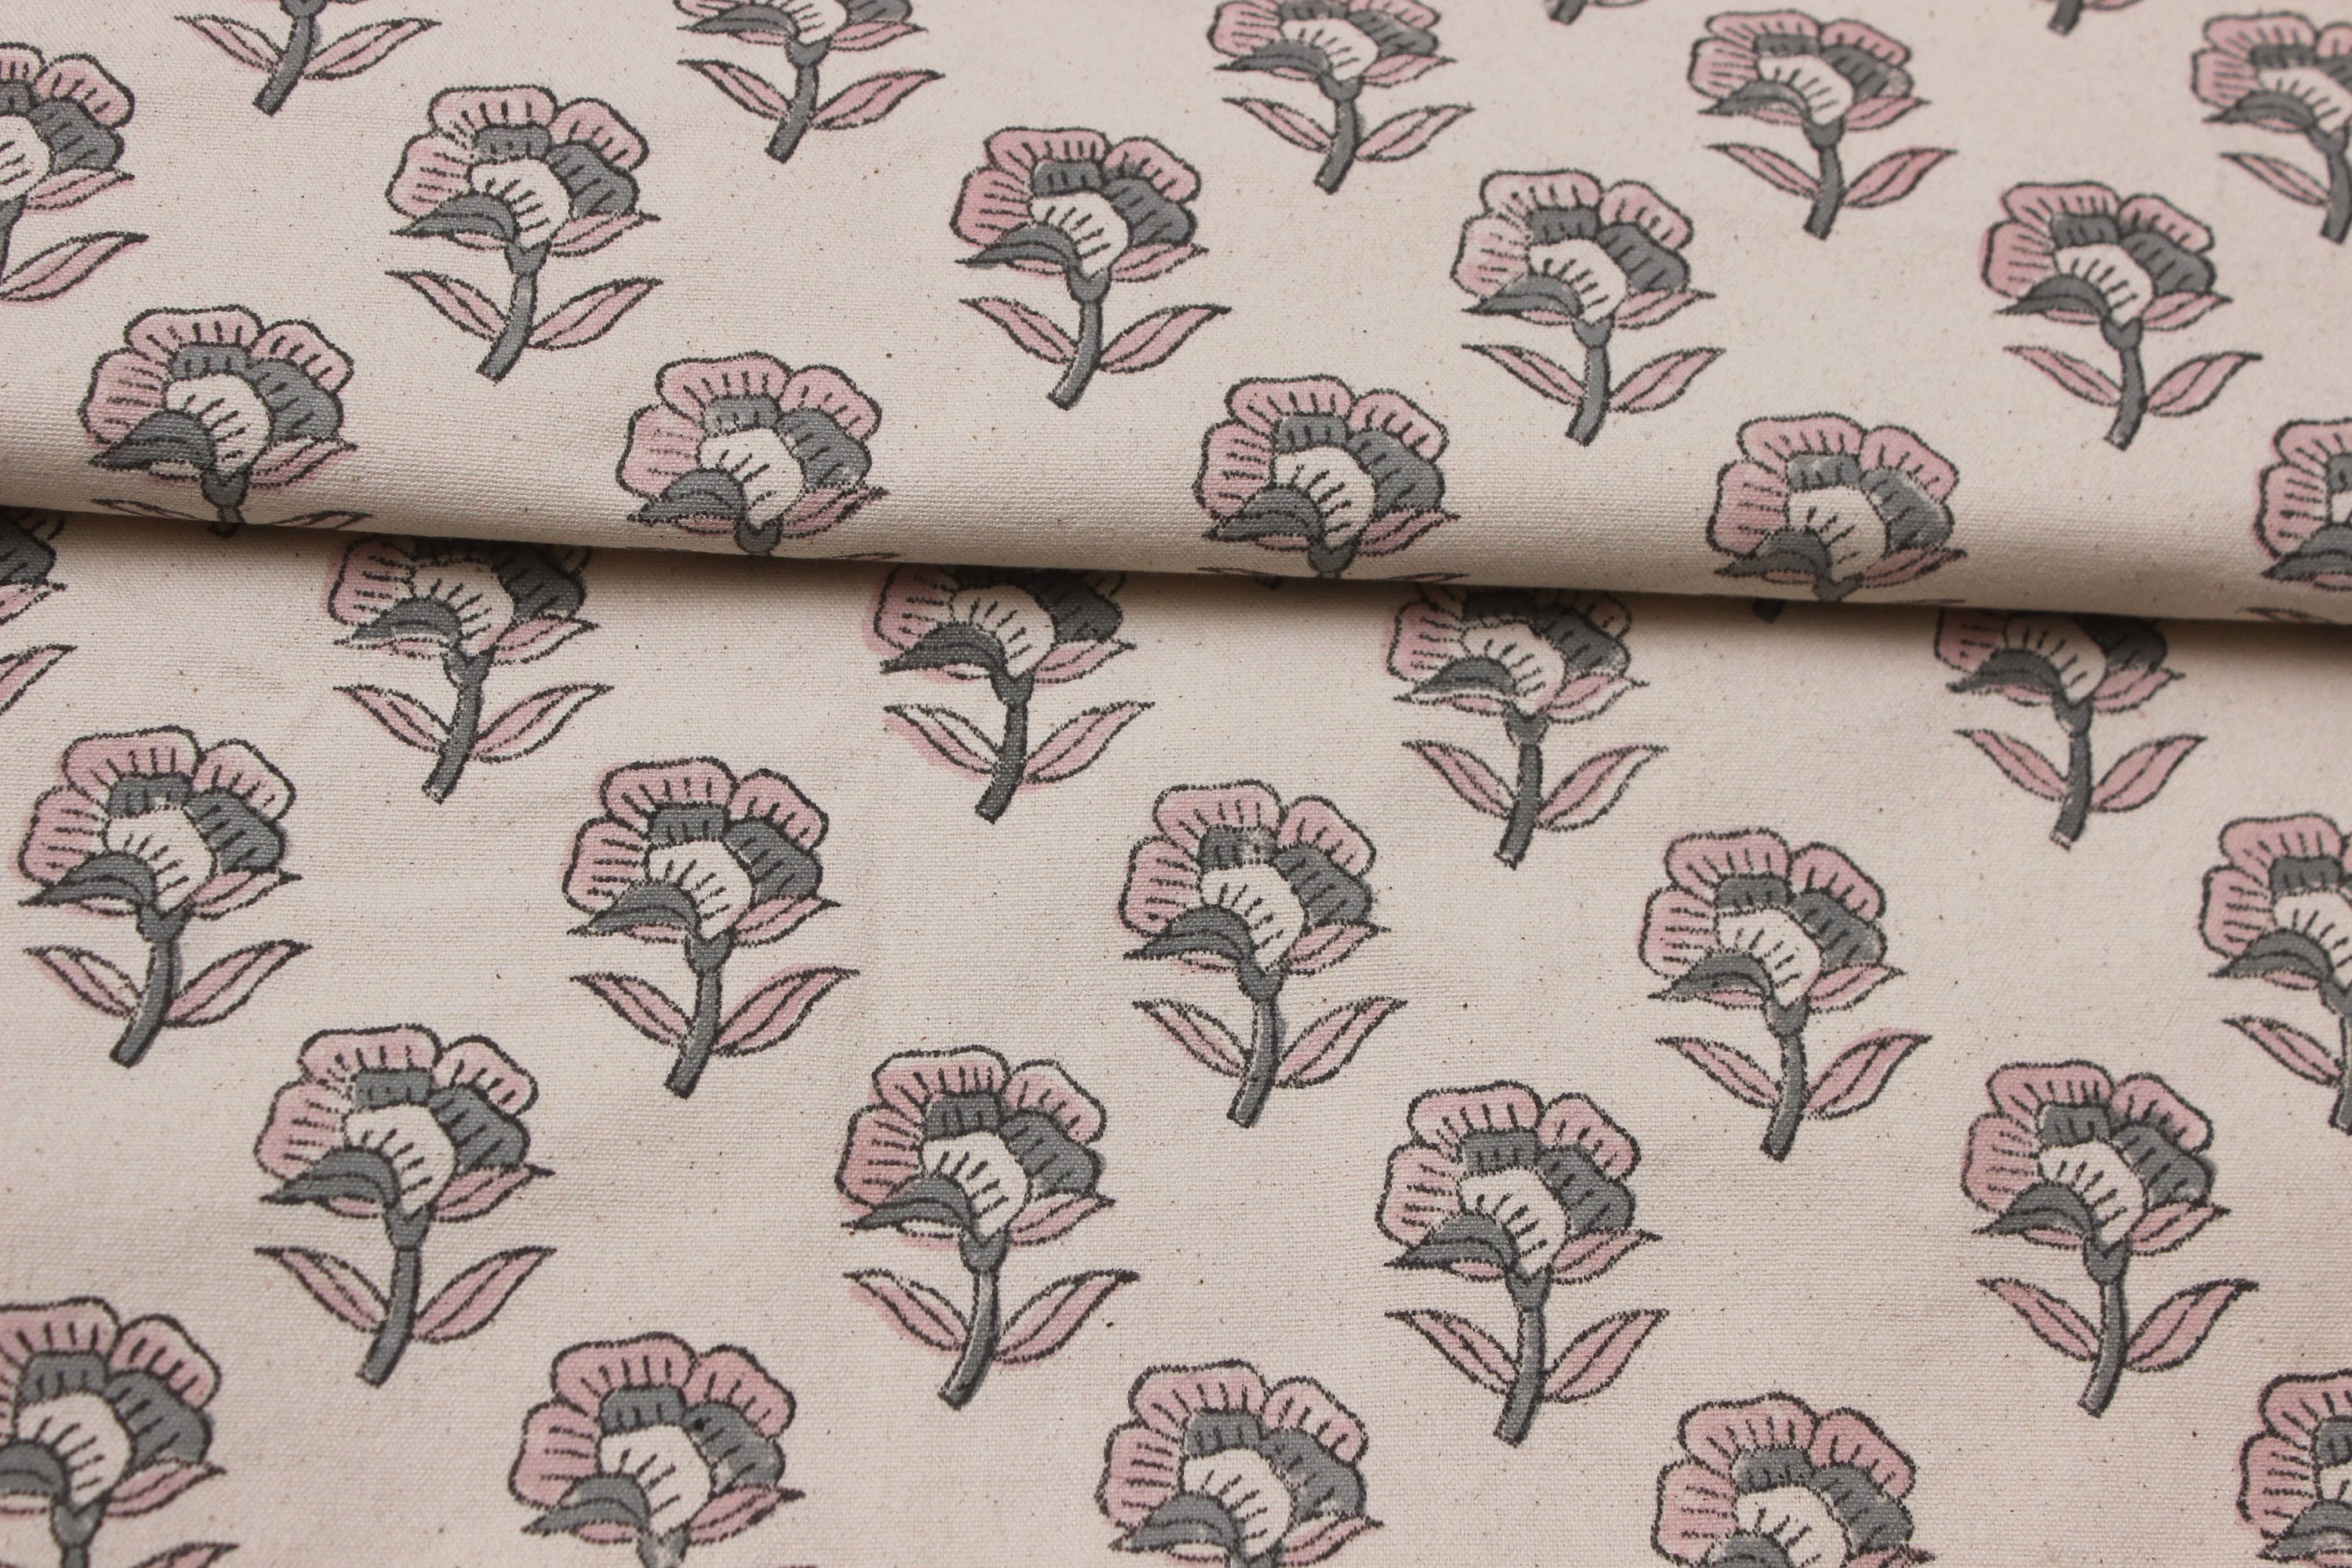 Block Print Linen Fabric, R0Hini  Printed Fabric Floral Print, Block Print Fabric, Indian Fabric By The Yard Upholstery Fabric, Decorative Cushion Cover Fabric